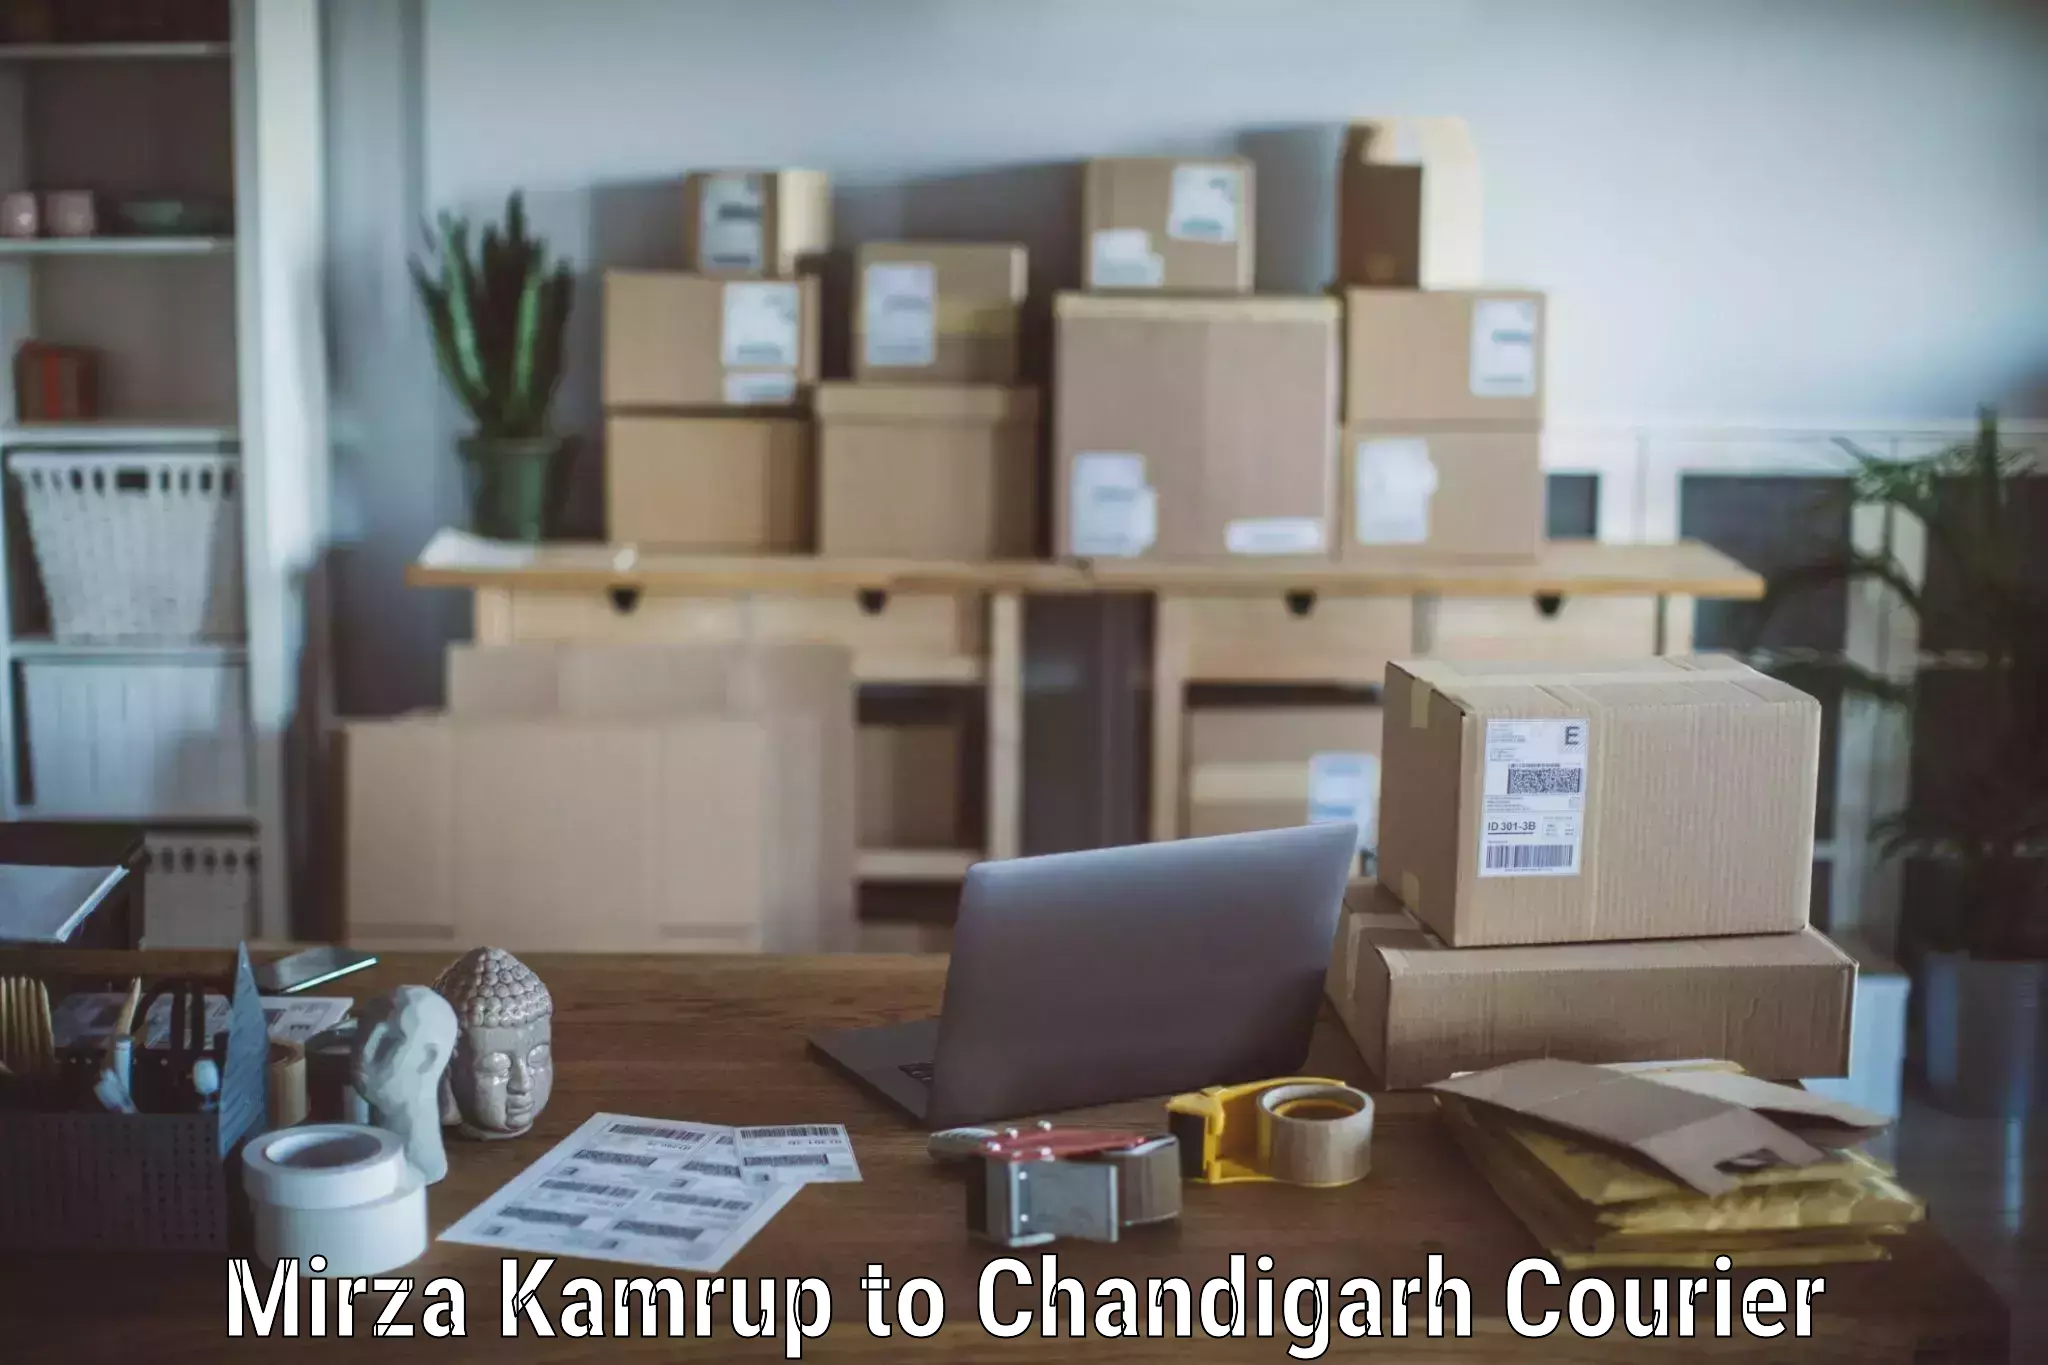 Professional moving company Mirza Kamrup to Chandigarh